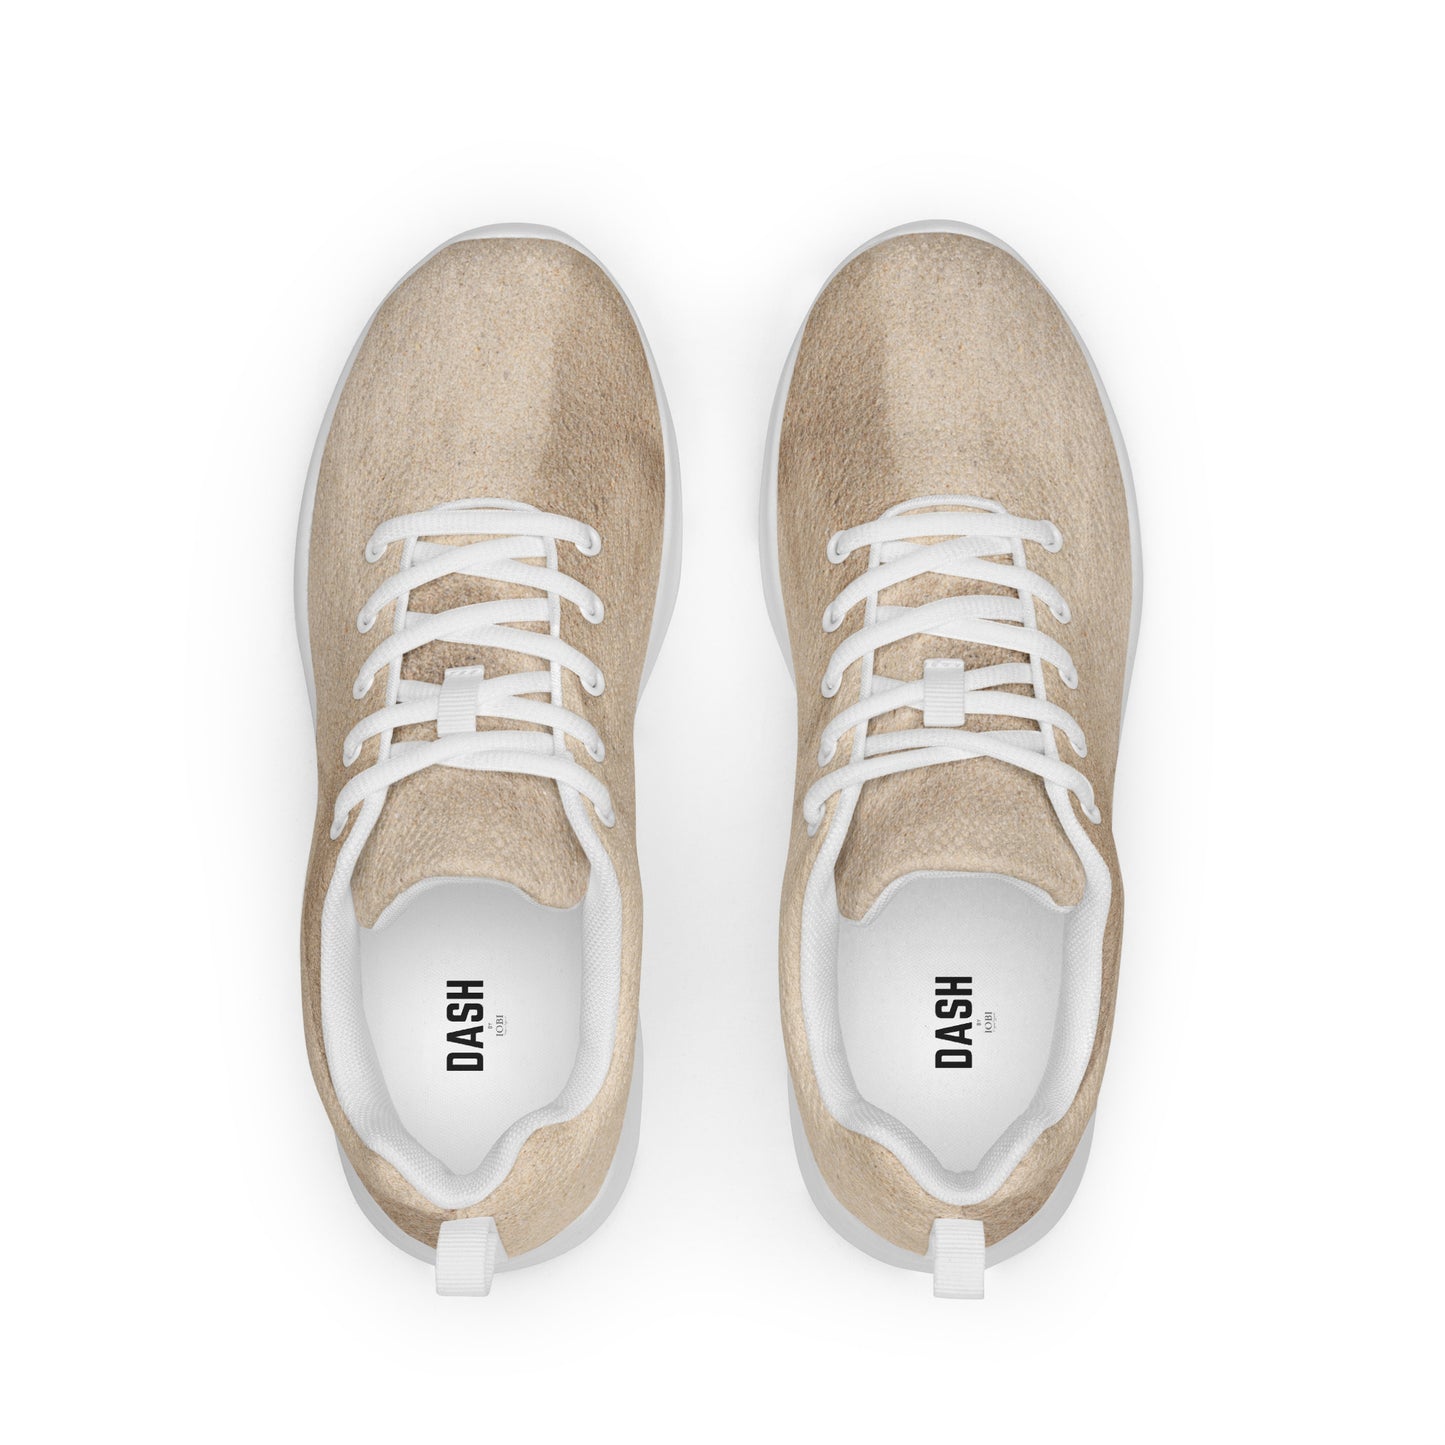 DASH Natural Sand Men’s Athletic Shoes Lightweight Breathable Design by IOBI Original Apparel